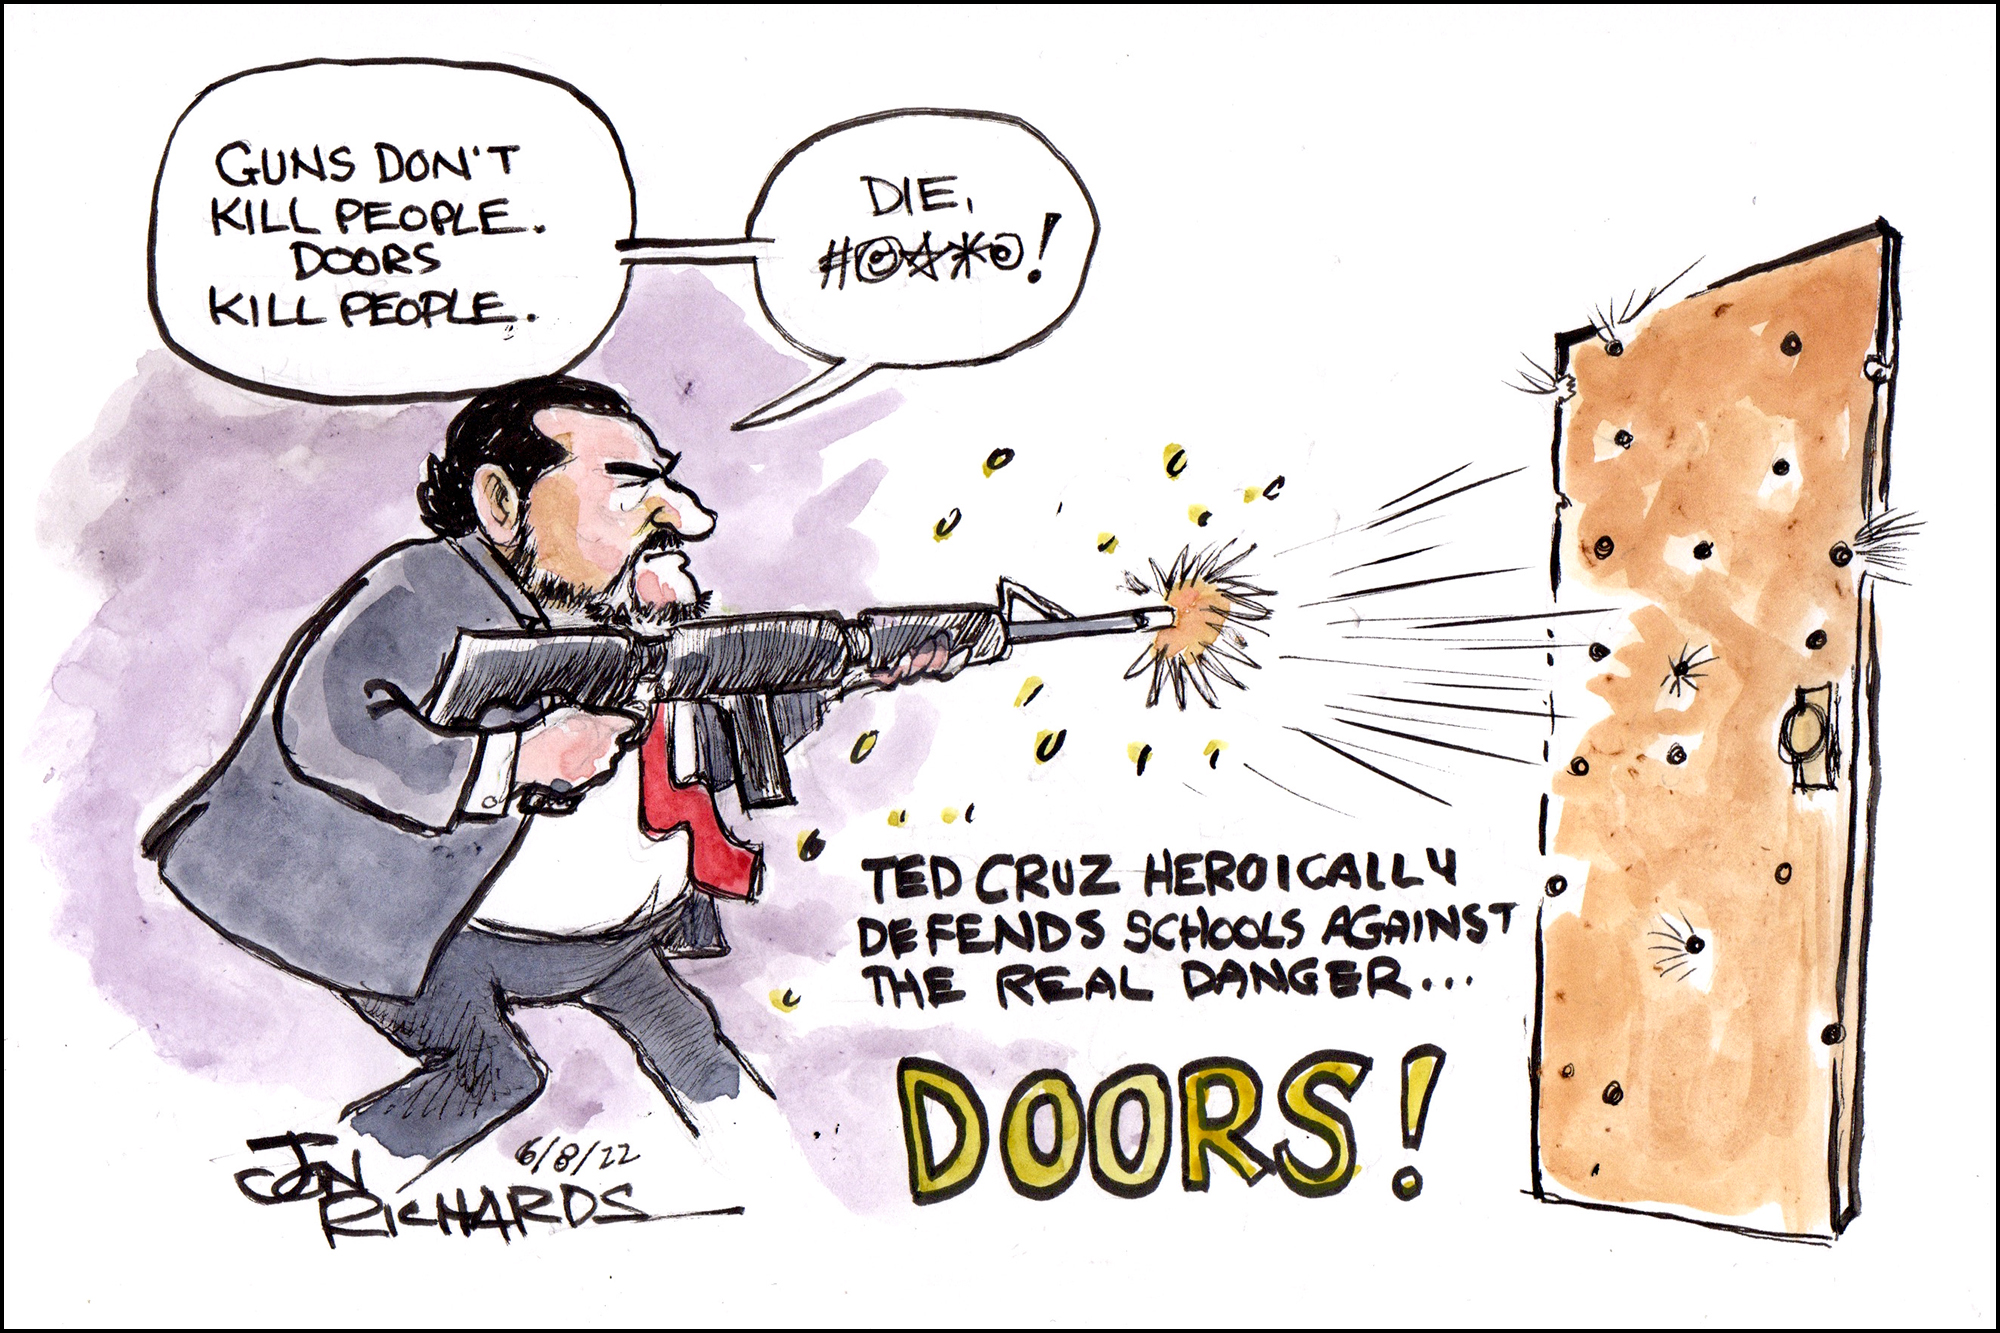 Ted Cruz, gun violence, hypocrite